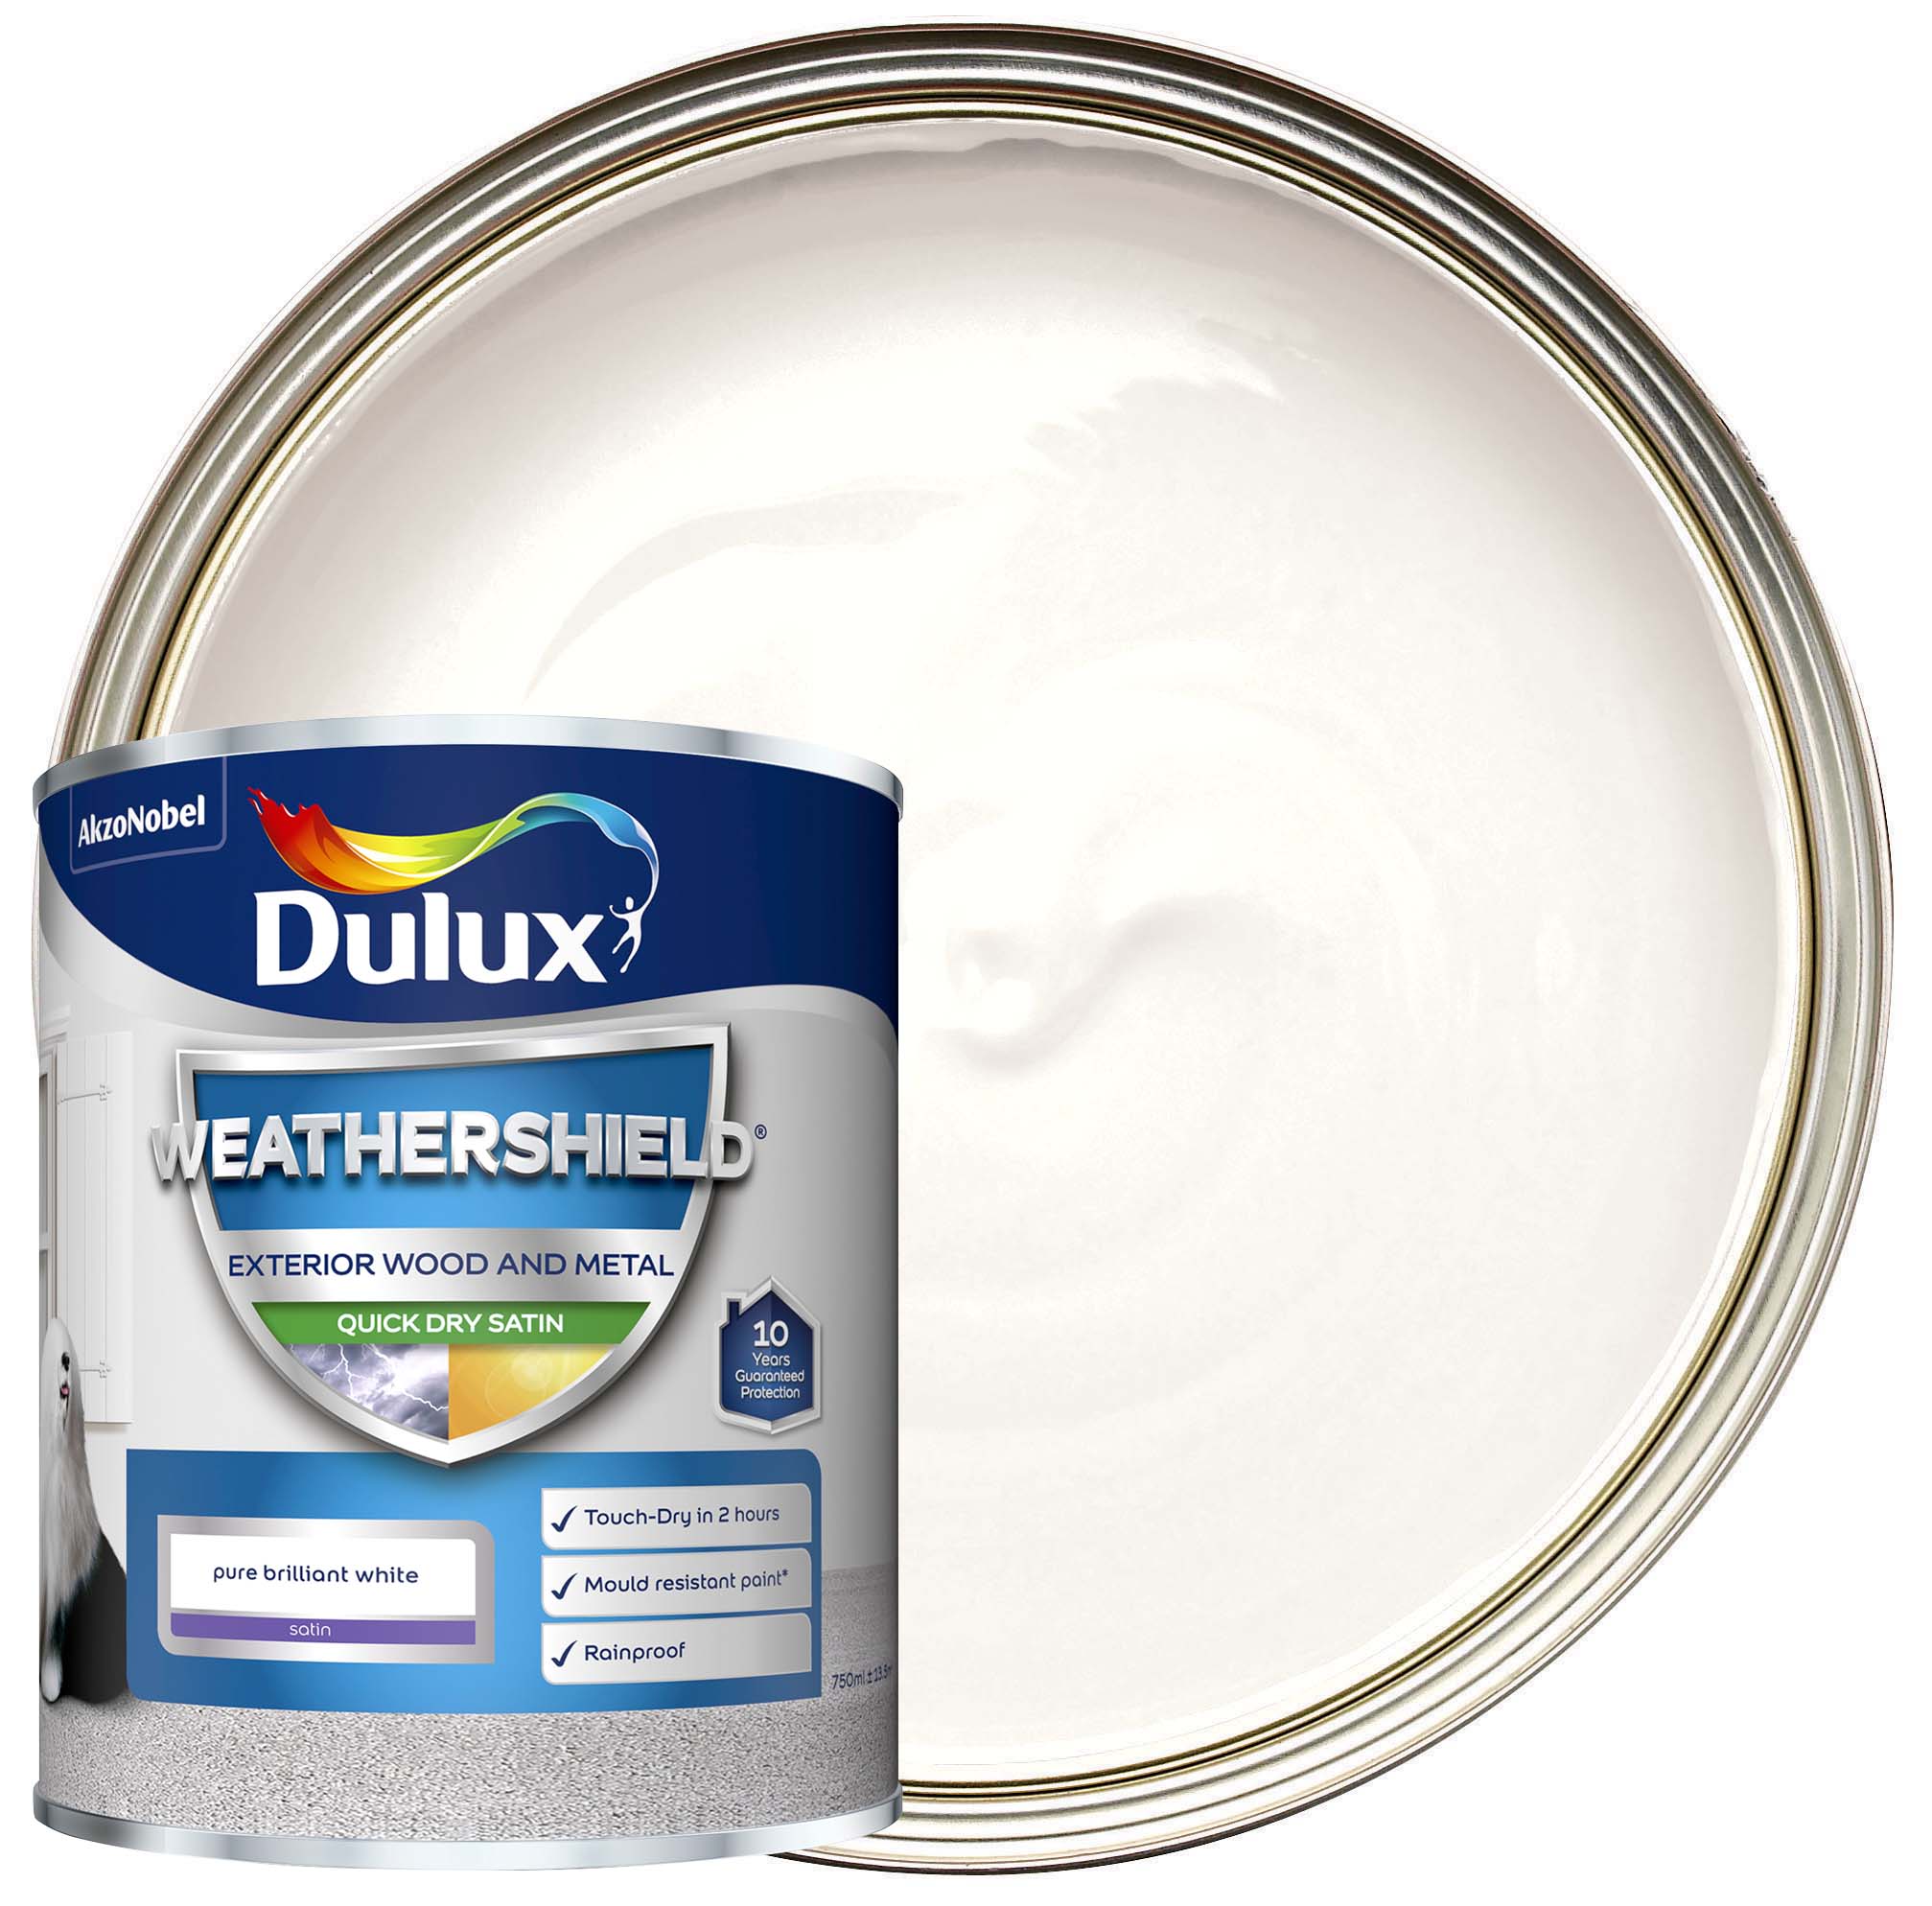 Image of Dulux Weathershield Quick Dry Satin Paint - Pure Brilliant White - 750ml